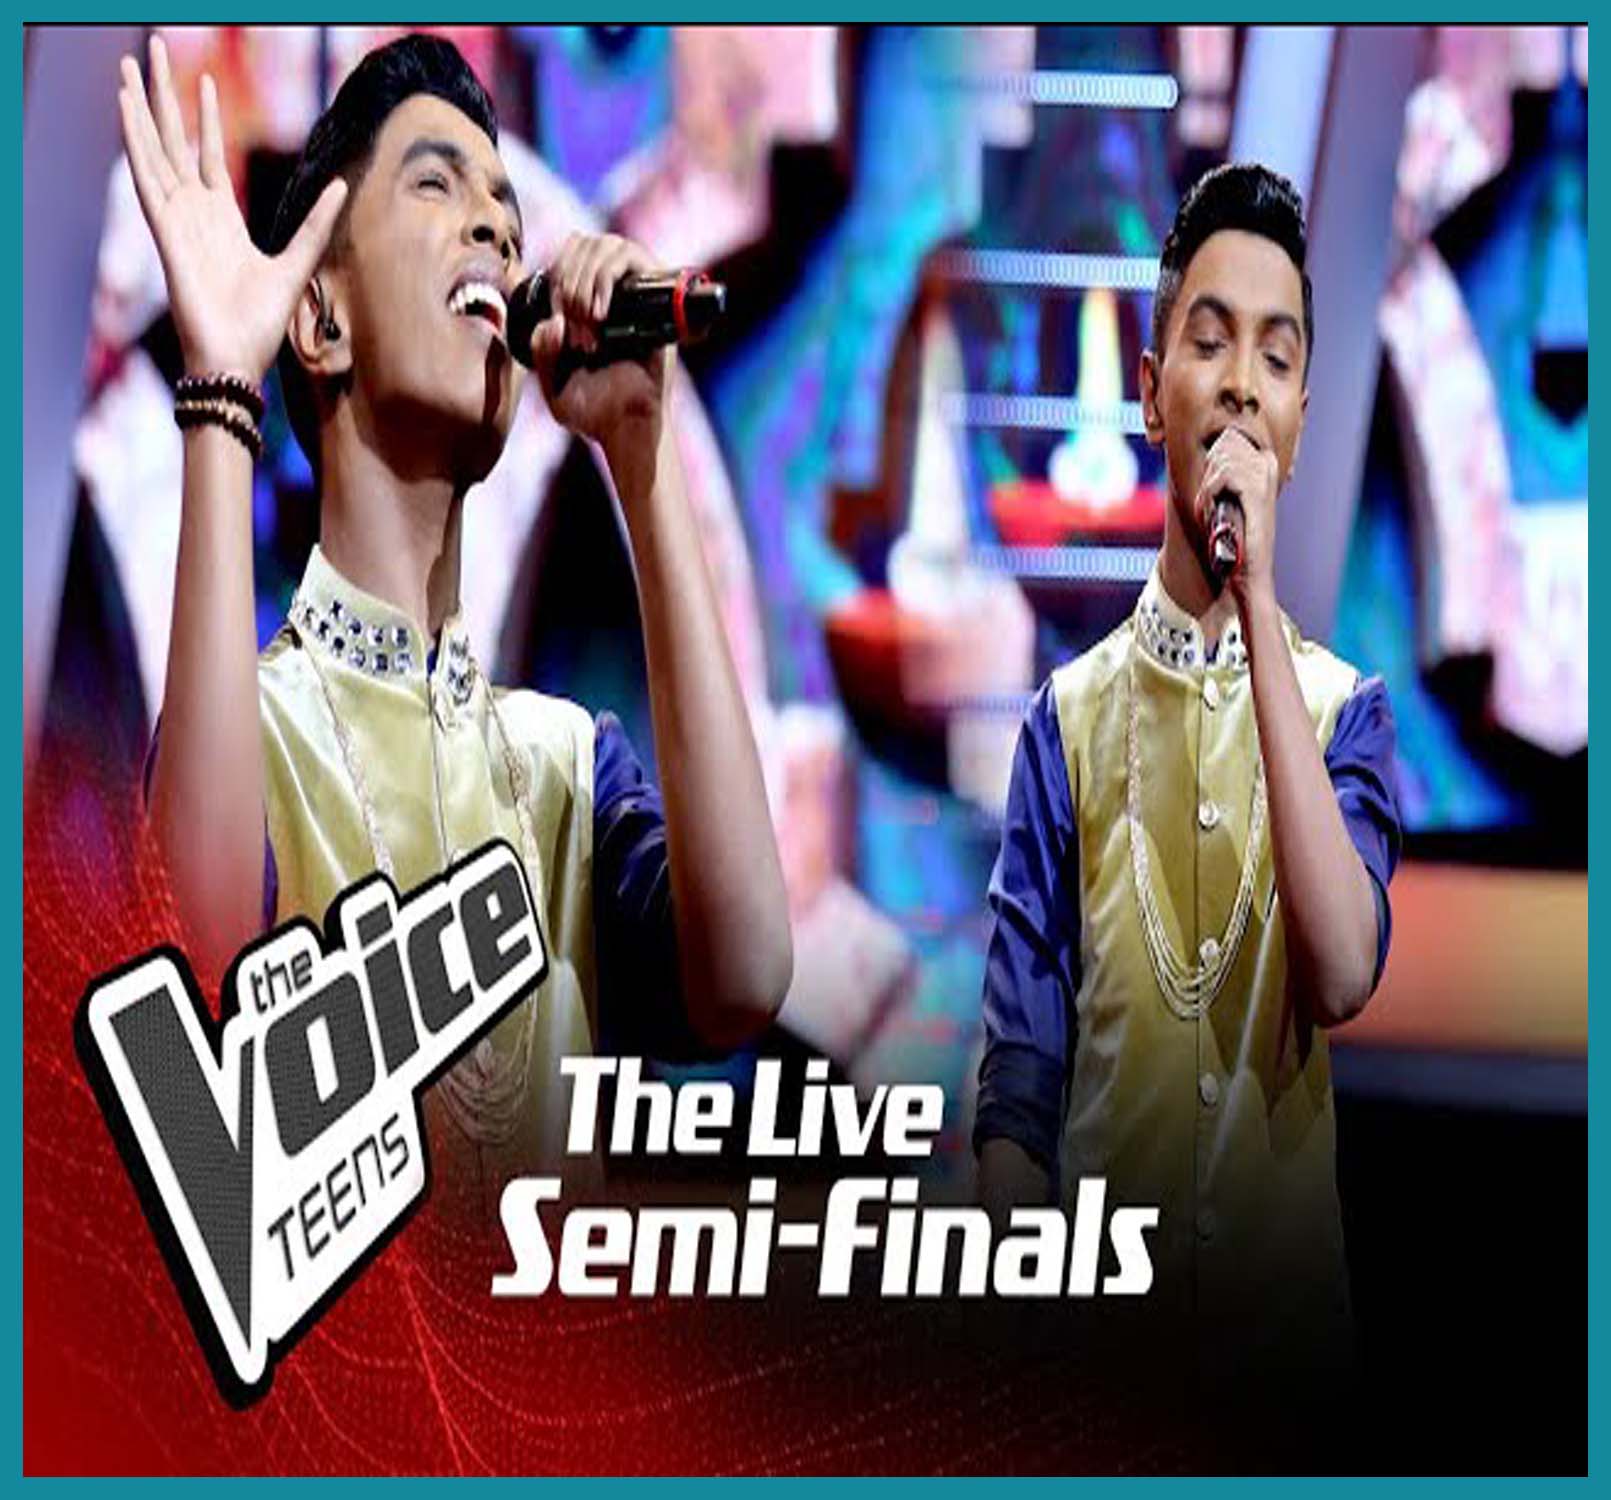 Aaruyirae (The Voice Teens Semi Finals)